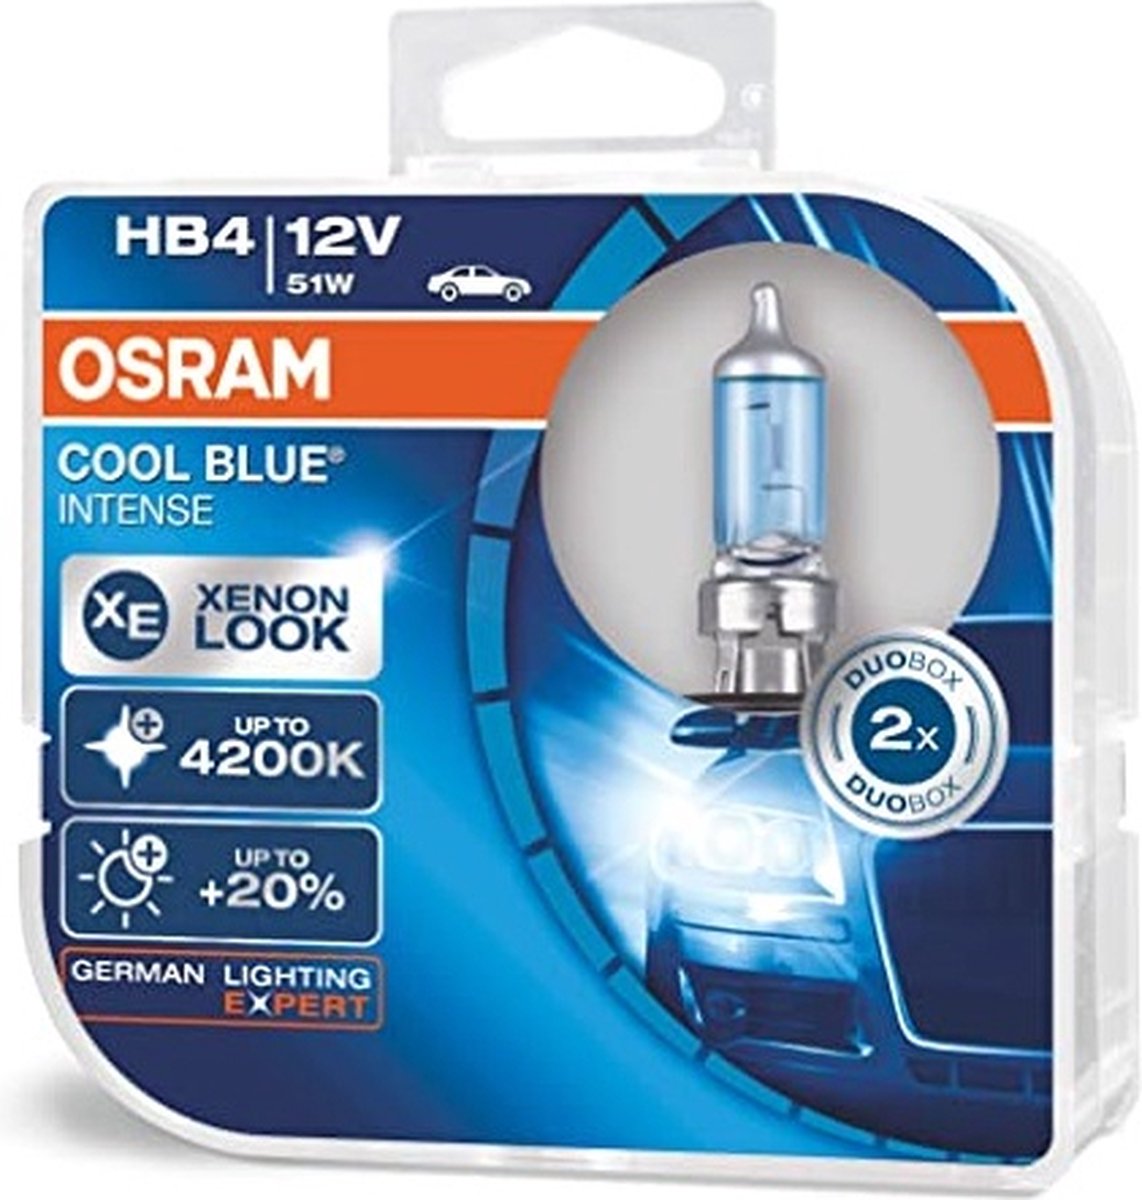 2 stuks Osram Cool Blue Intense HB4 Lampen 20% meer licht - 4200K Xenon Look A Like Lampen